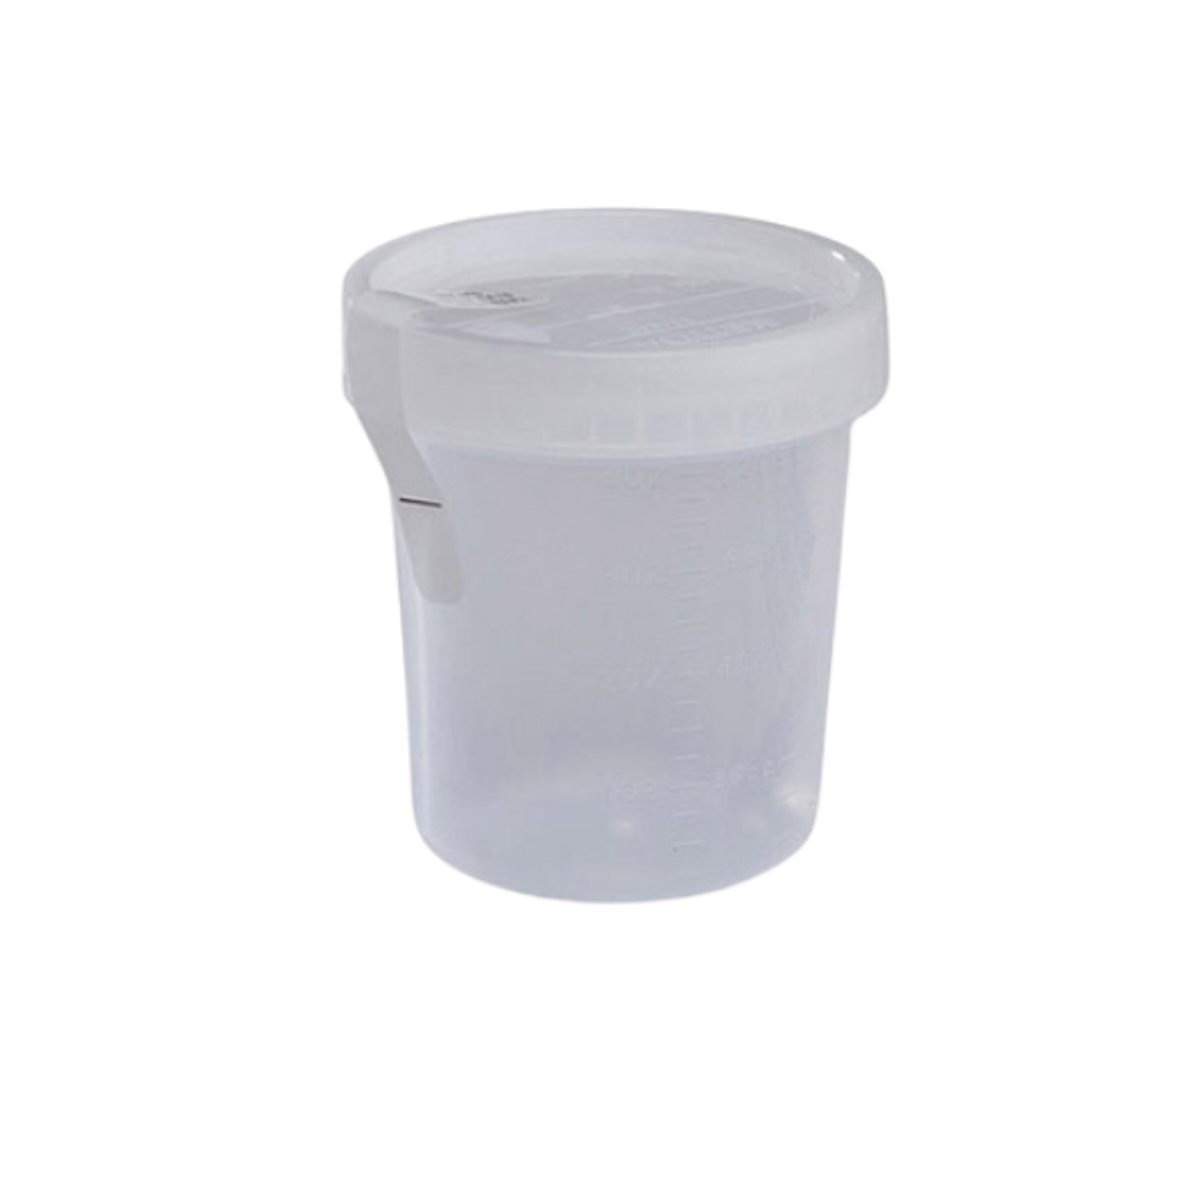 Medegen Specimen Container, Translucent with Lid, 4 oz